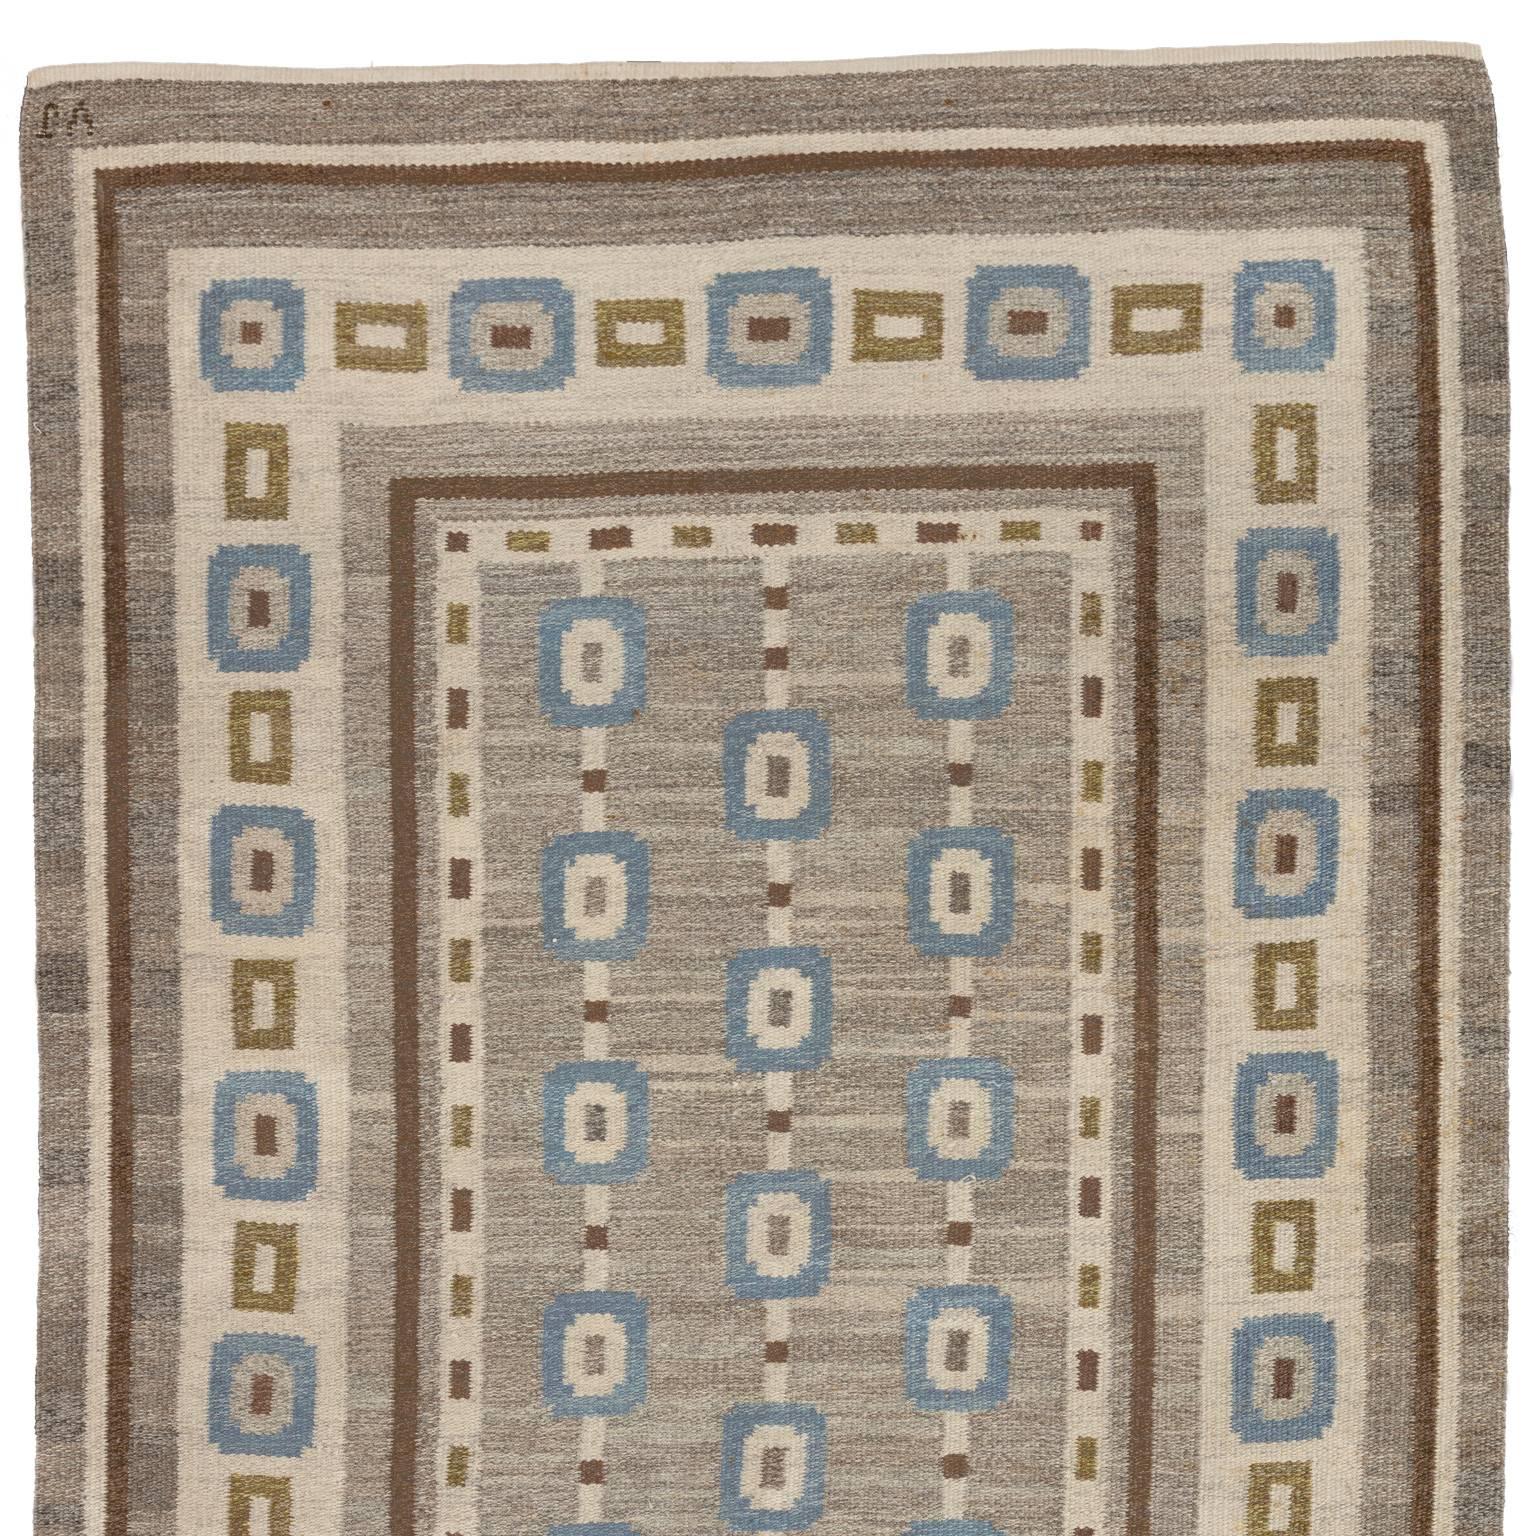 Handwoven Swedish Wool rug in Flat-Weave signed V.J. 1